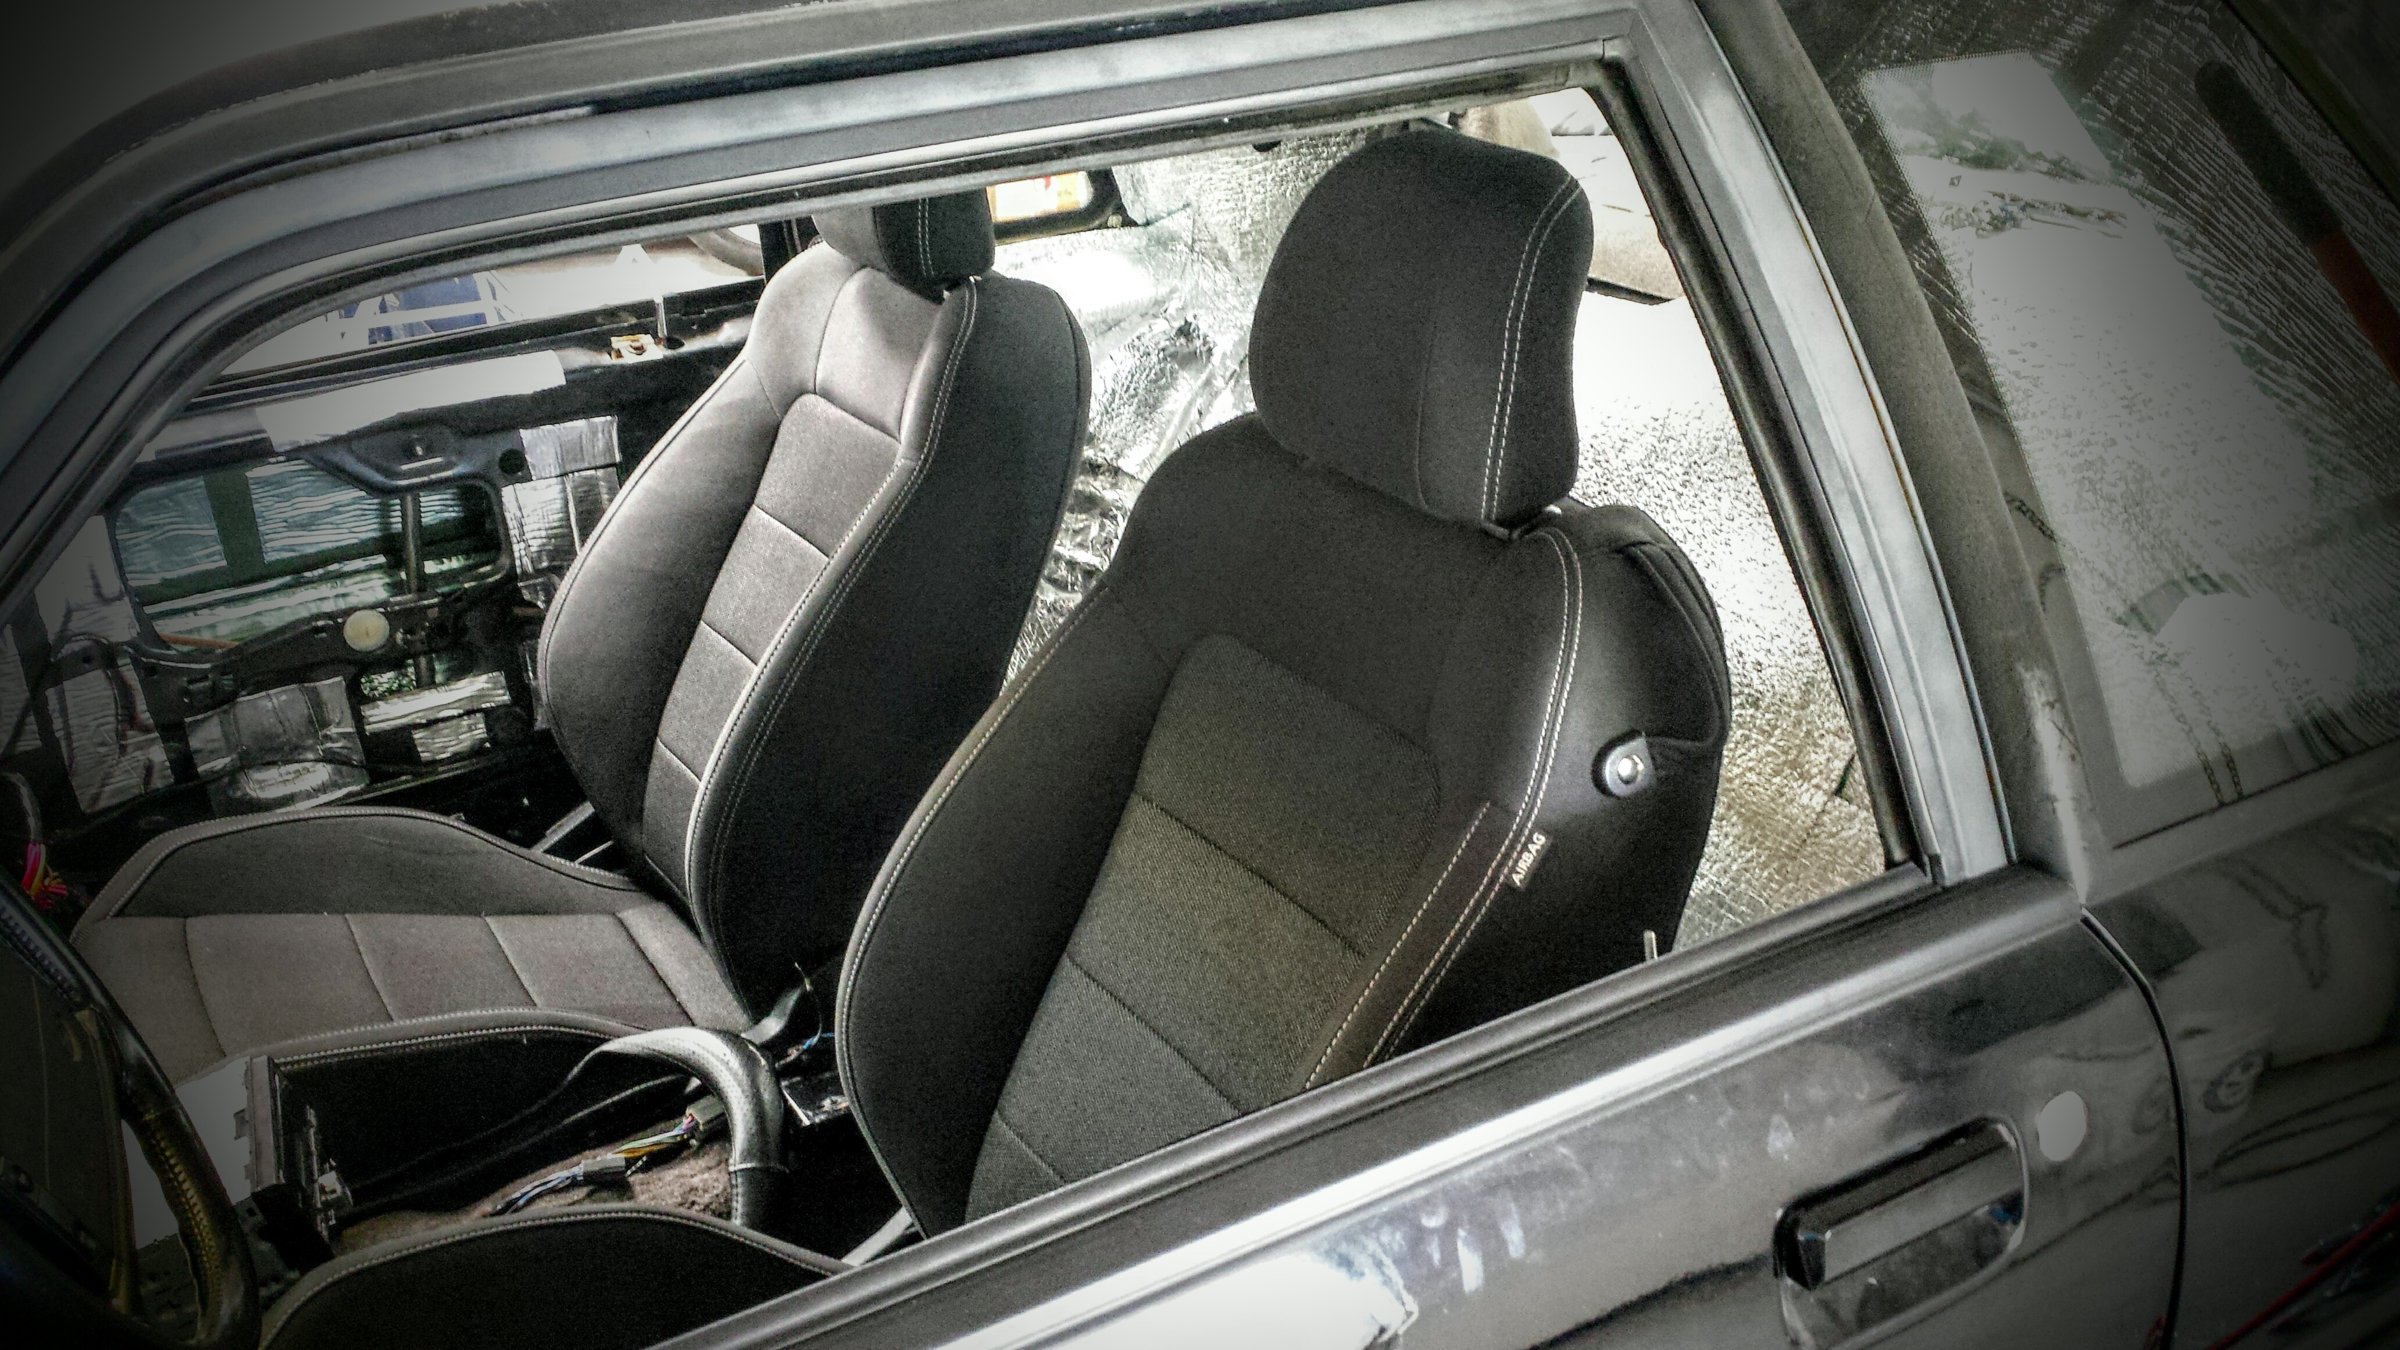 2015 Mustang Seats In Fox Mustang Forums At Stangnet